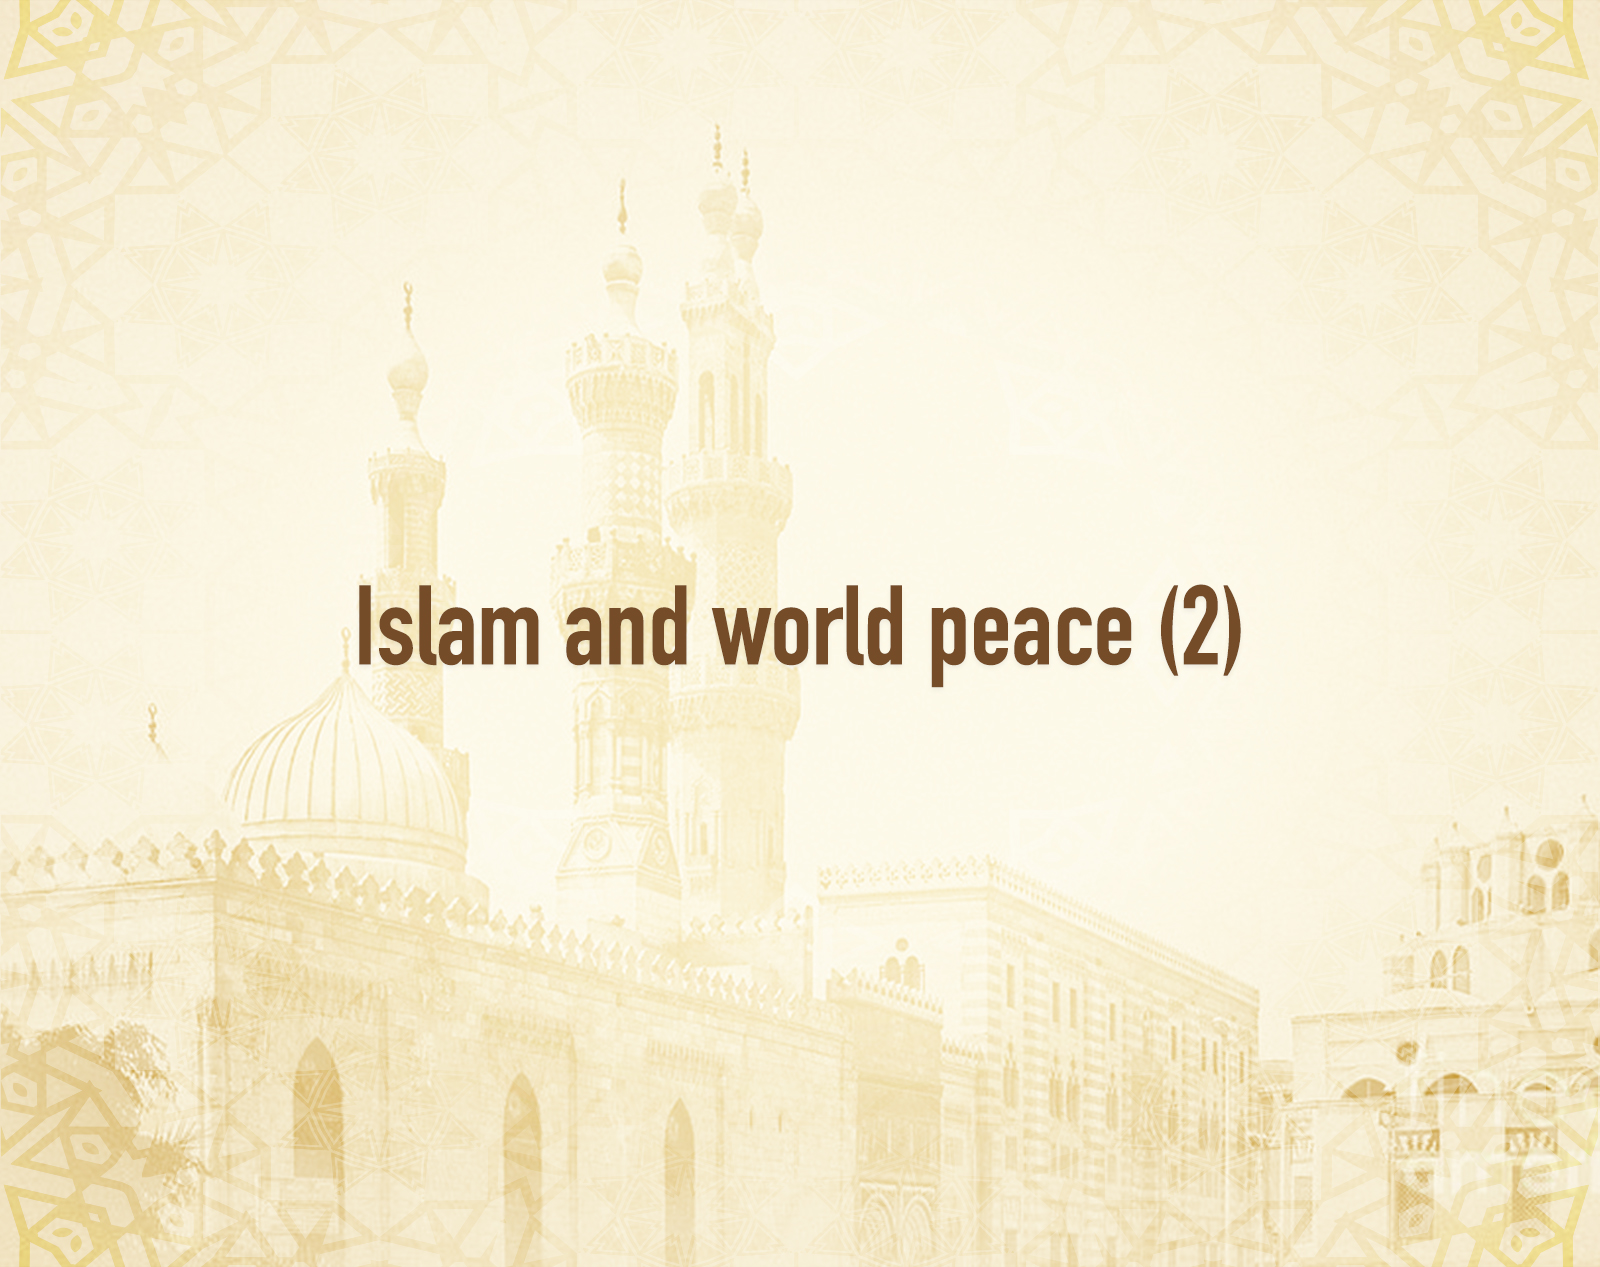 Islam and world peace (2)_.jpg